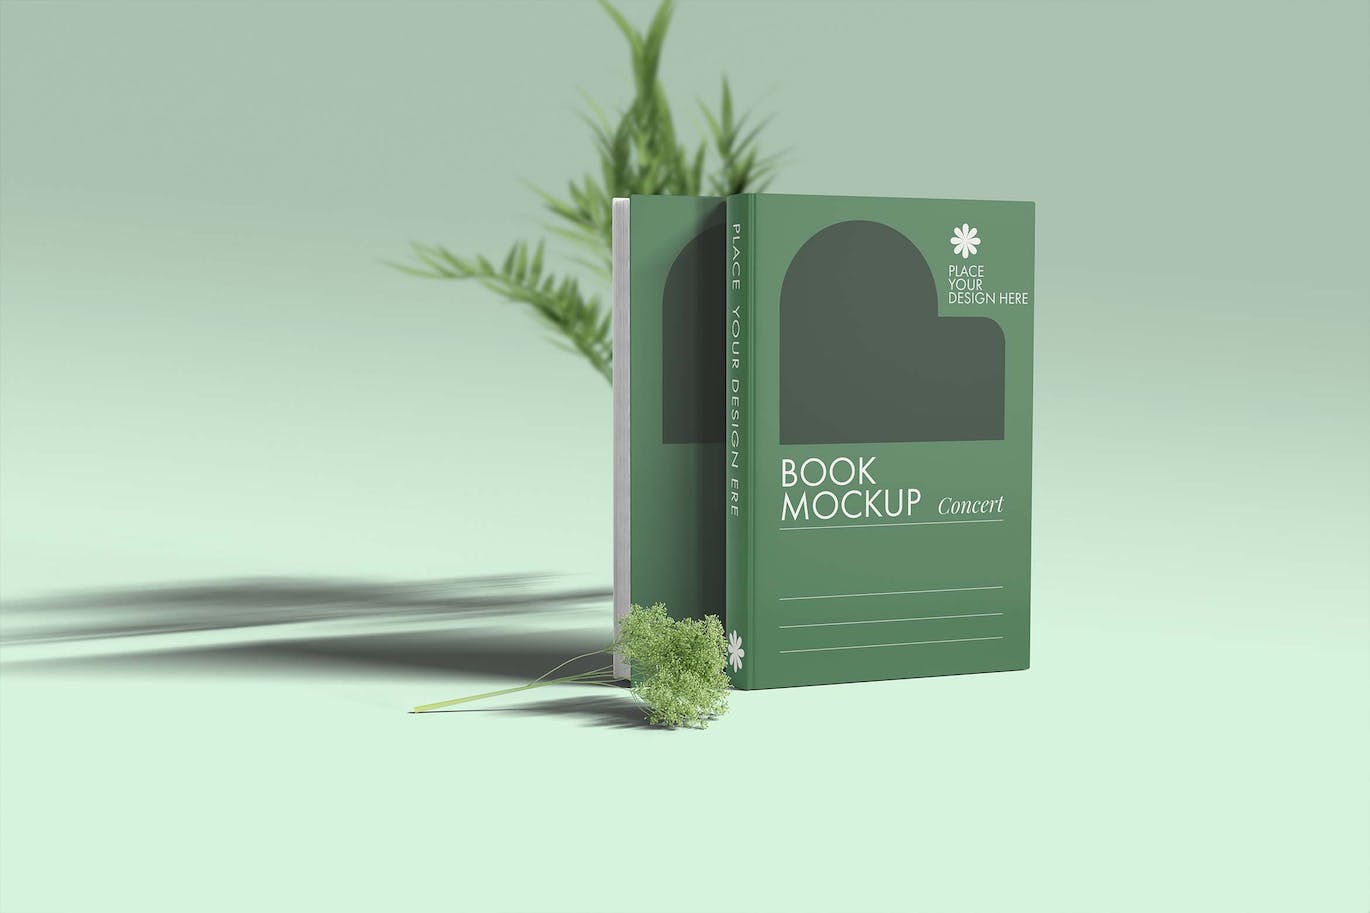 带植物装饰的书籍书皮封面展示样机图 Book Cover Mockup with Plant Ornament 样机素材 第1张